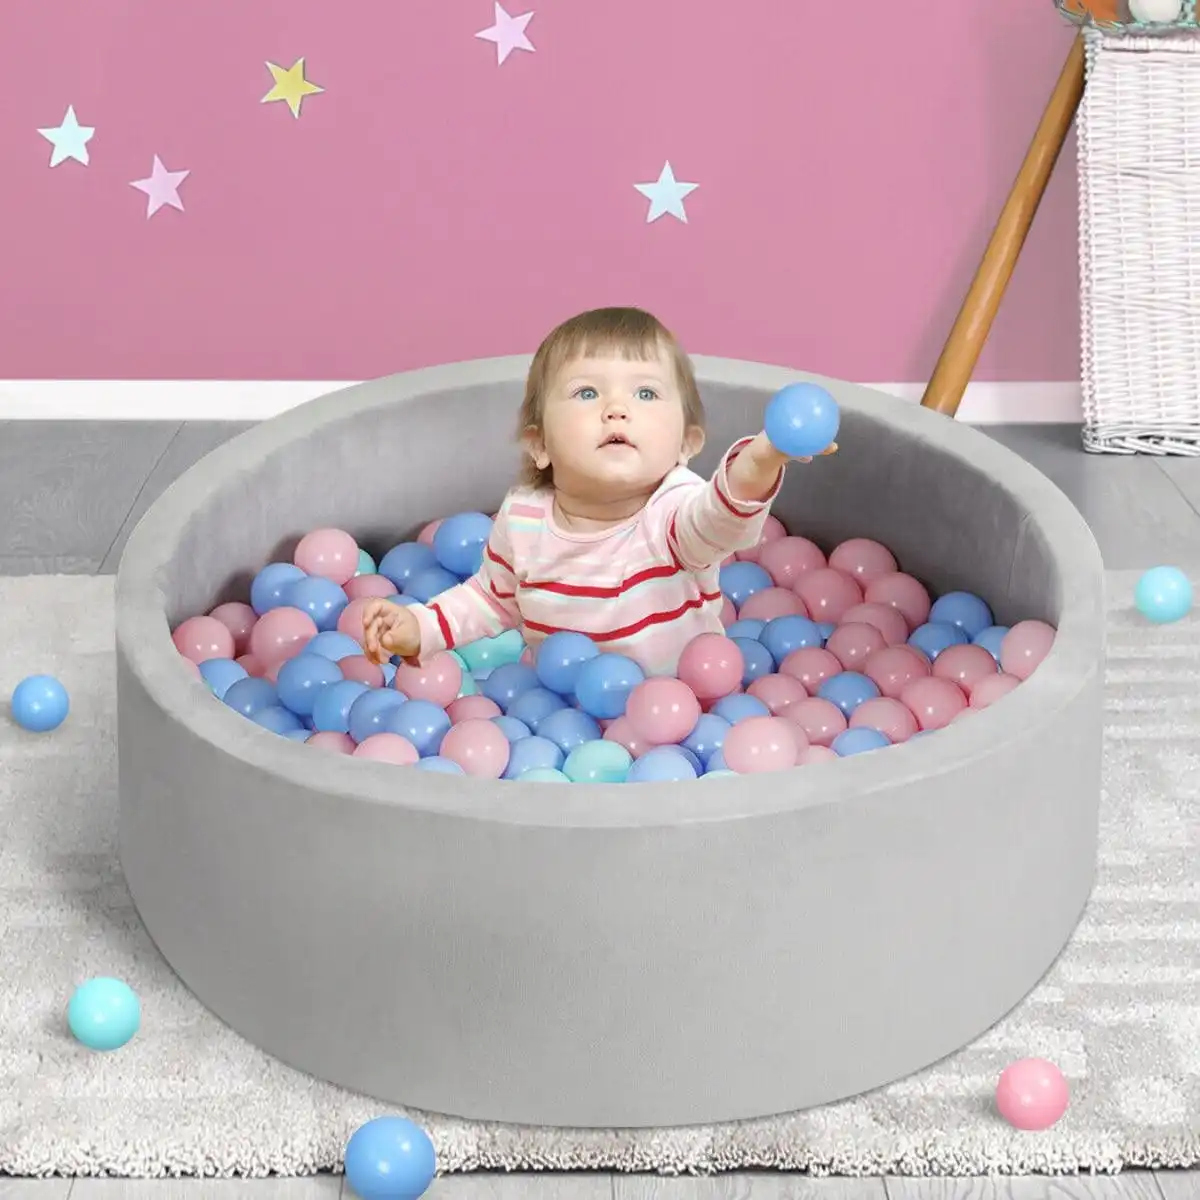 BabiesMart Ultimate Foam Ball Pit Fun Indoor Play & Skill Development Barrier